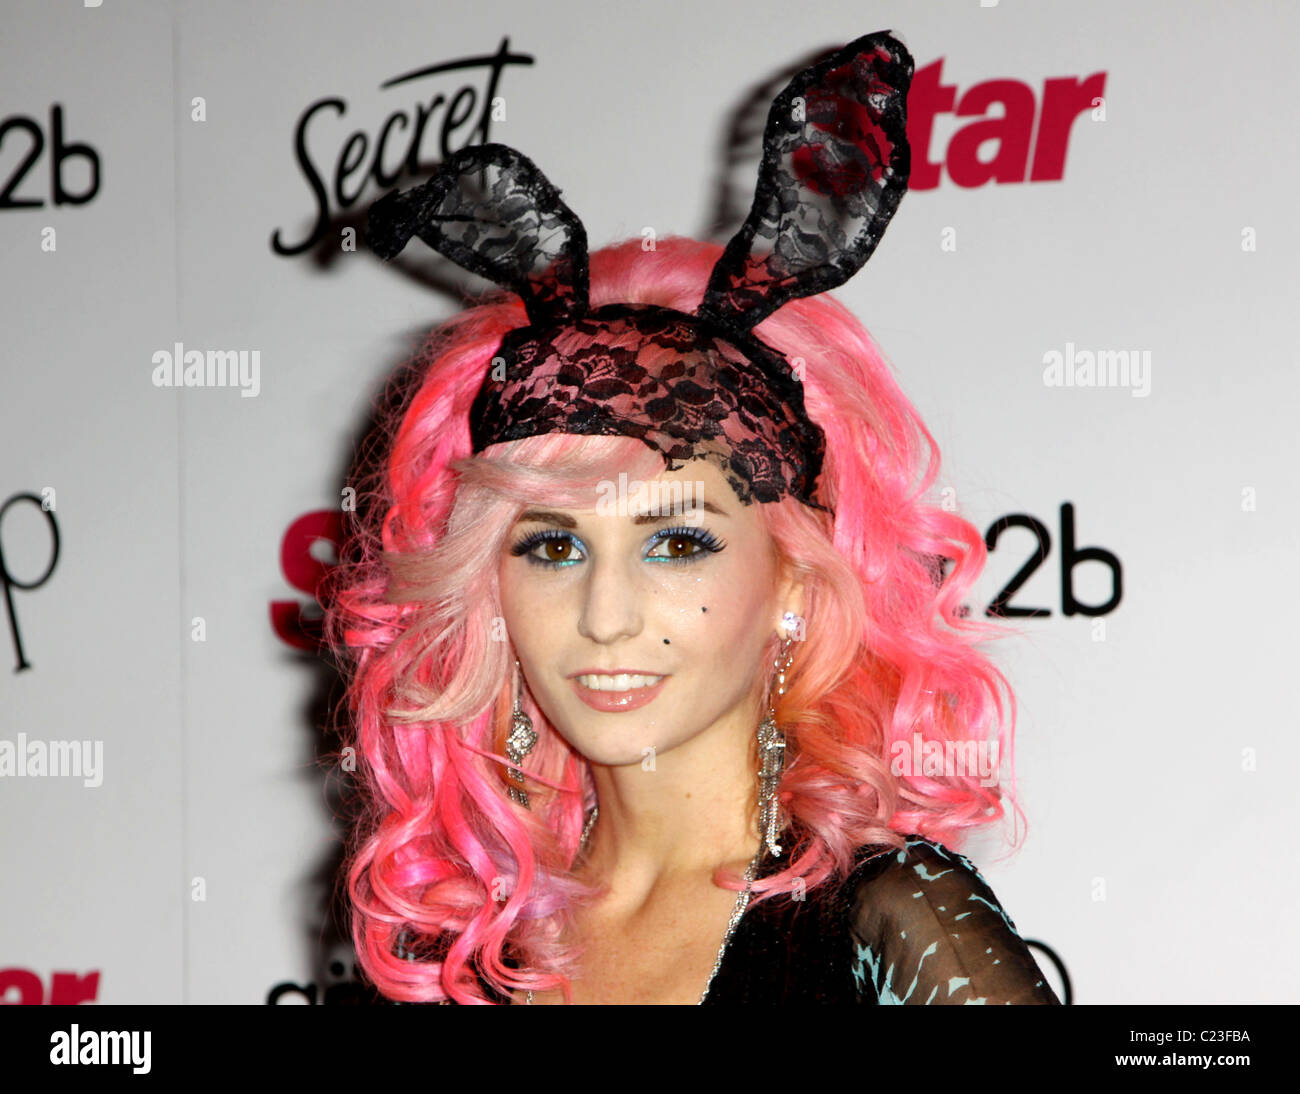 Audrey Kitching Star Magazine's 5th Year Anniversary Celebration held at Bardot - Arrivals Los Angeles, California - 13.10.09 Stock Photo